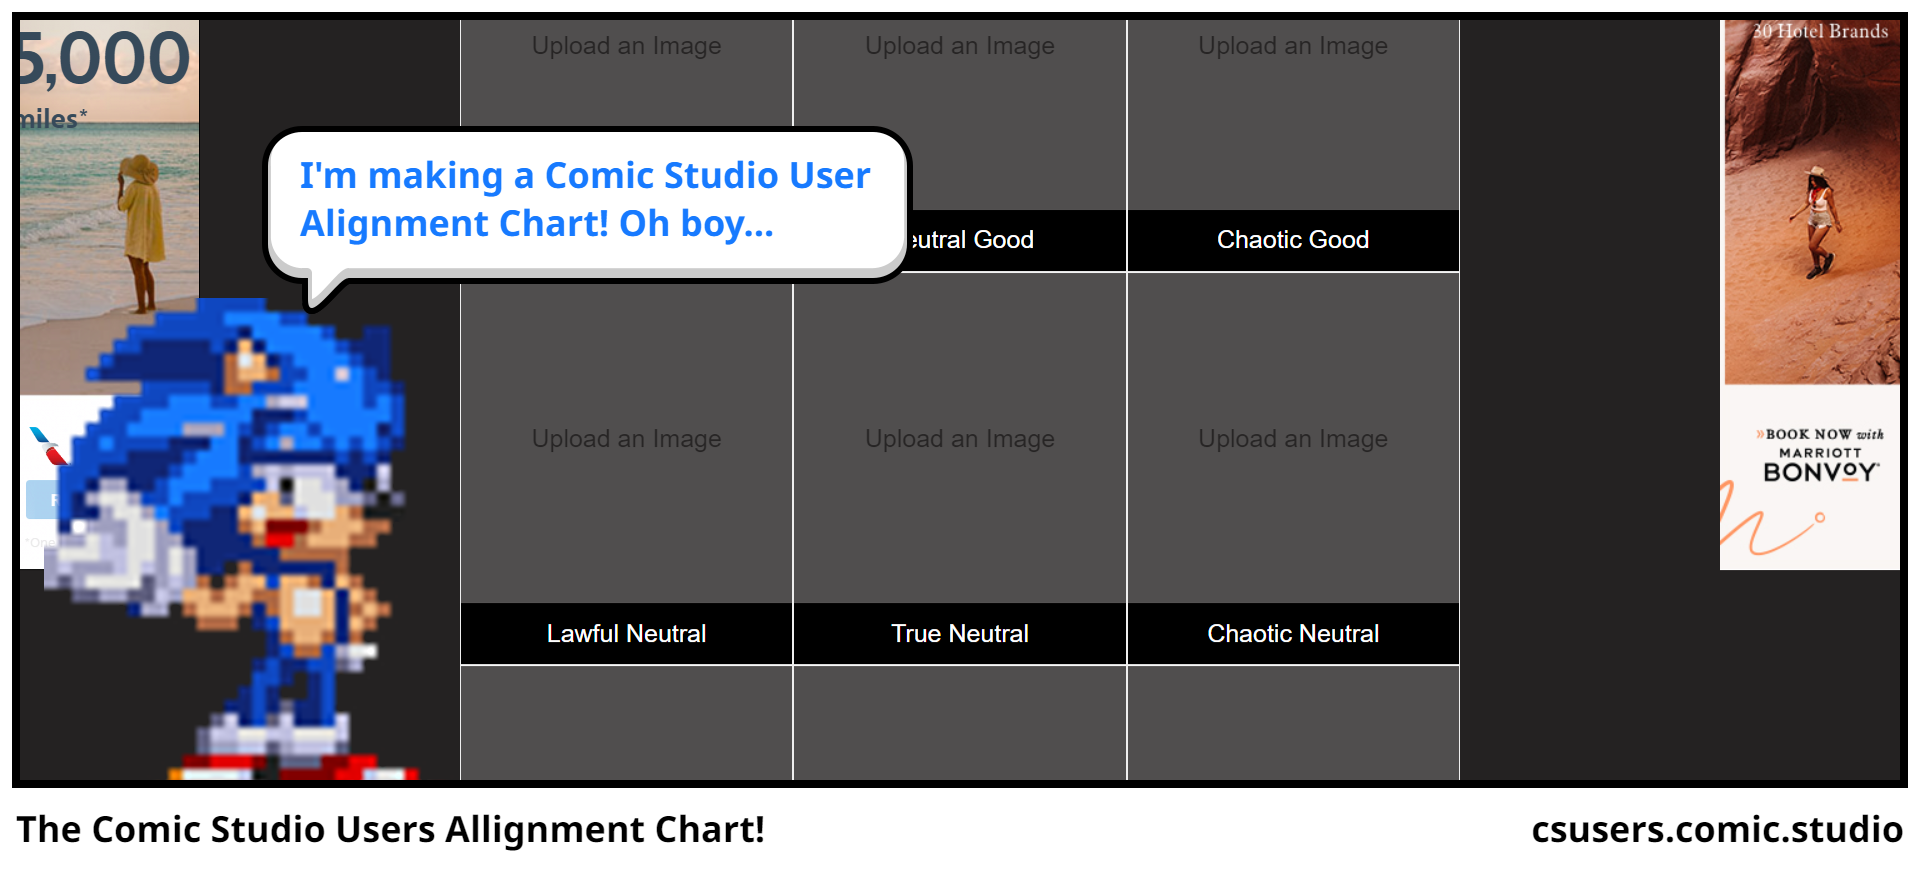 The Comic Studio Users Allignment Chart!